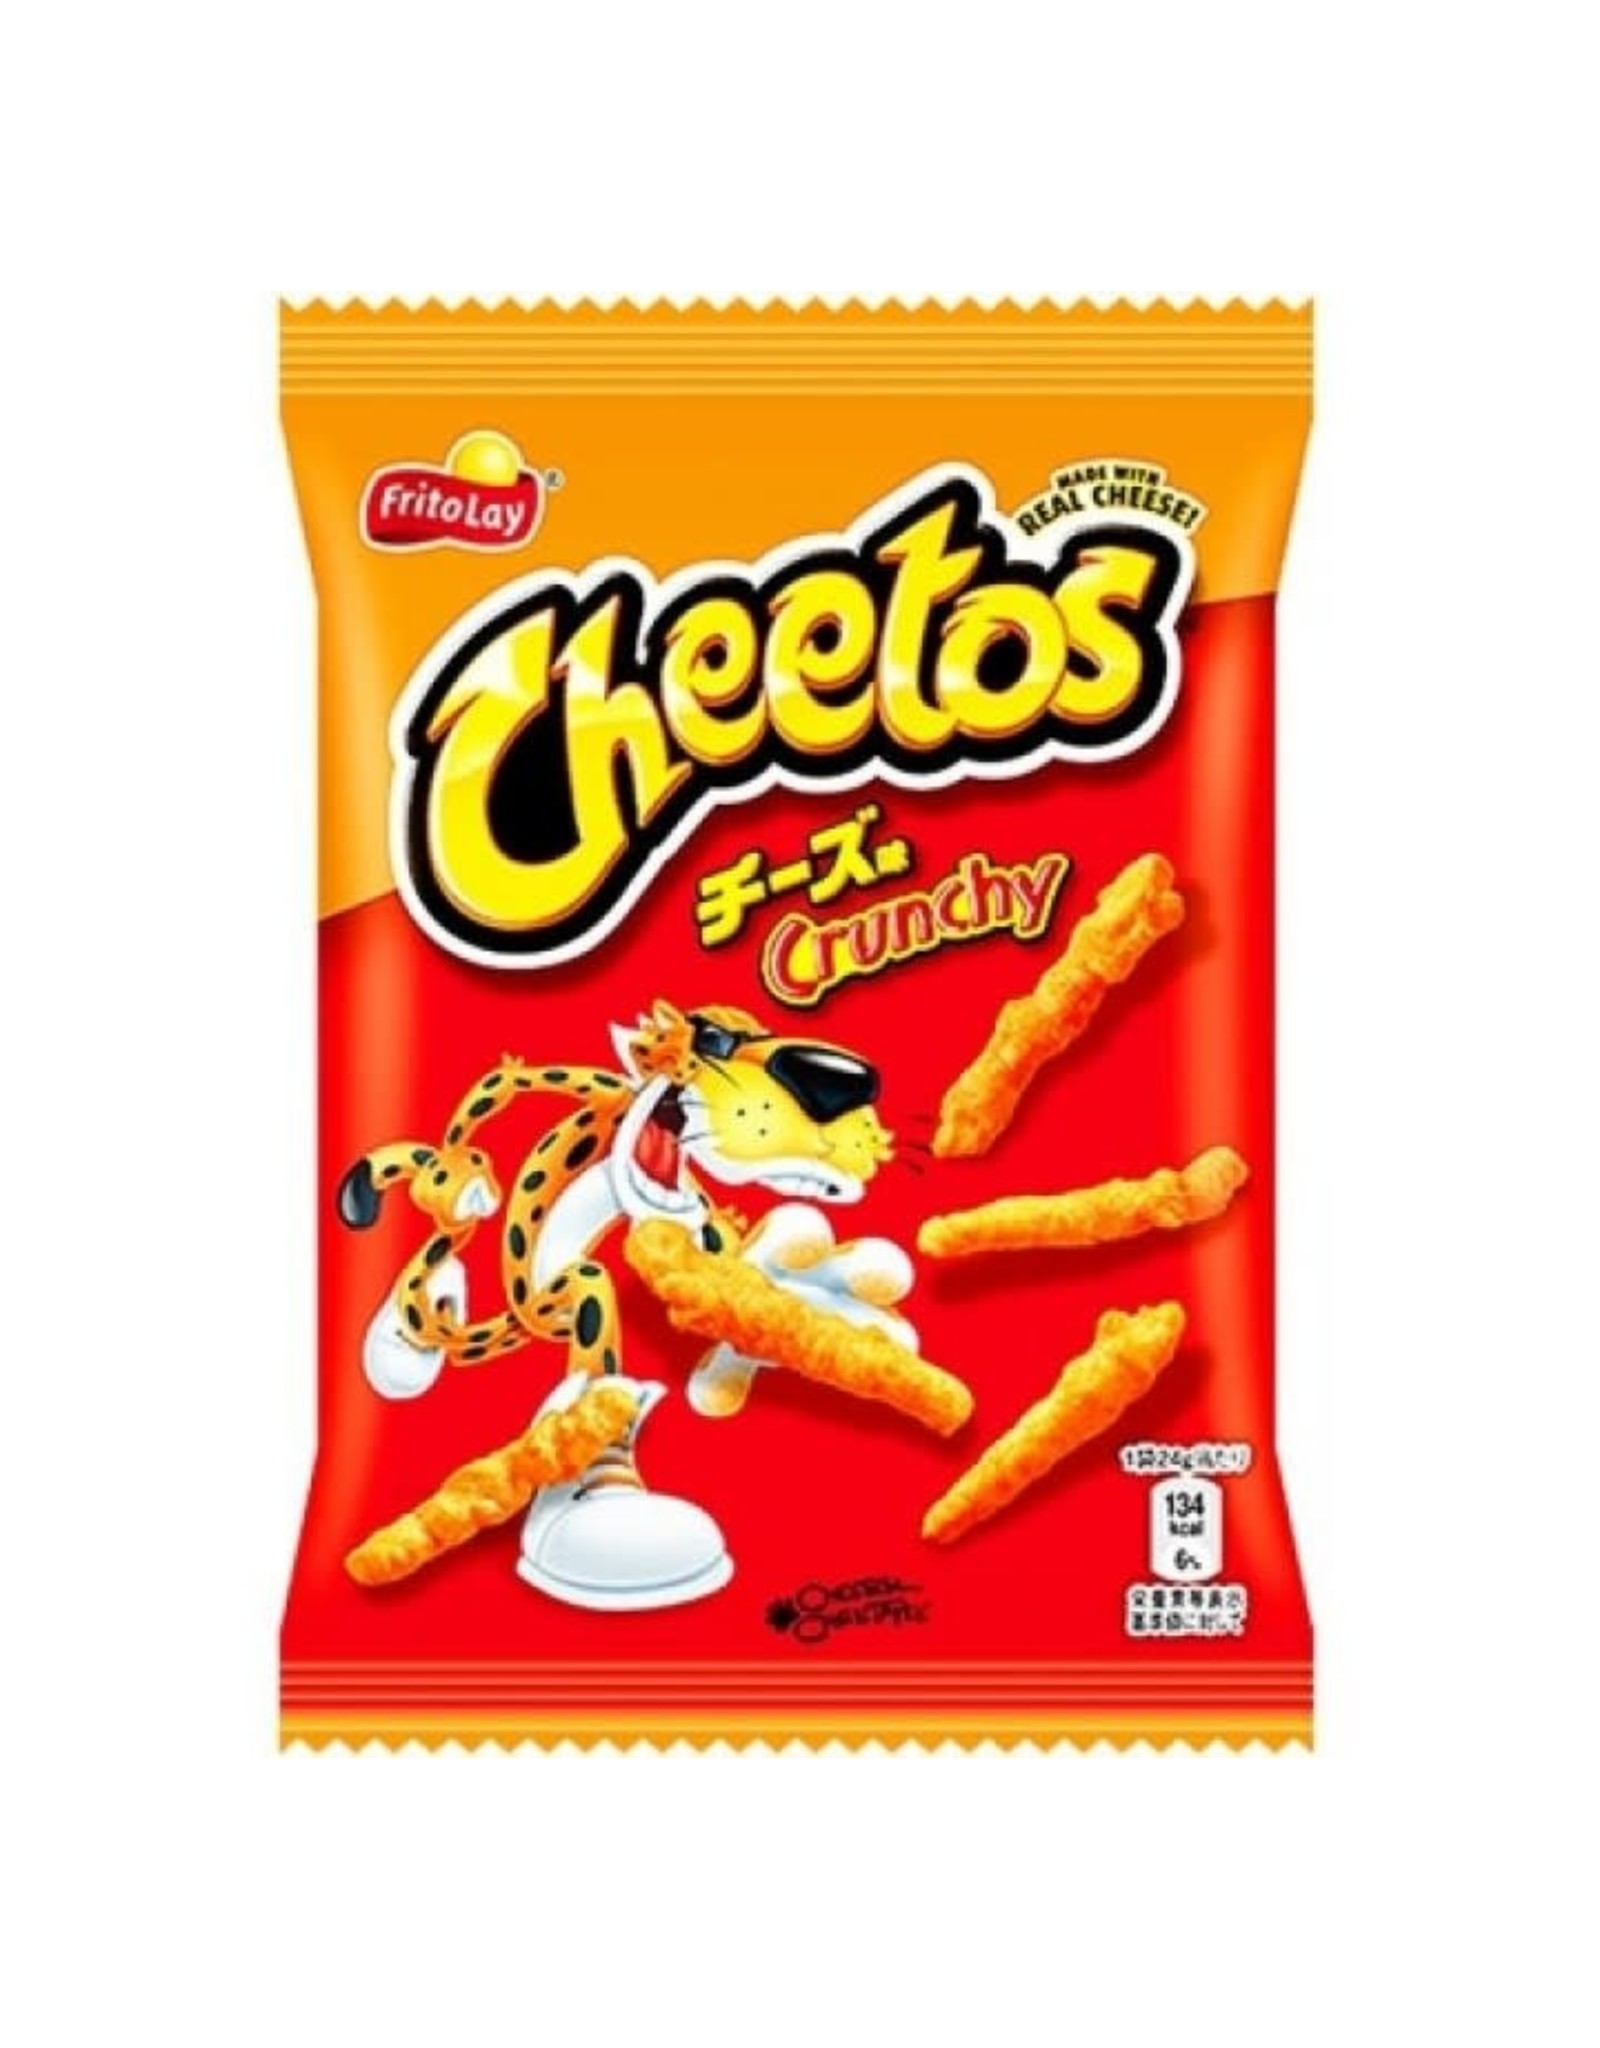 Cheetos Crunchy - 75g - Japanese Edition